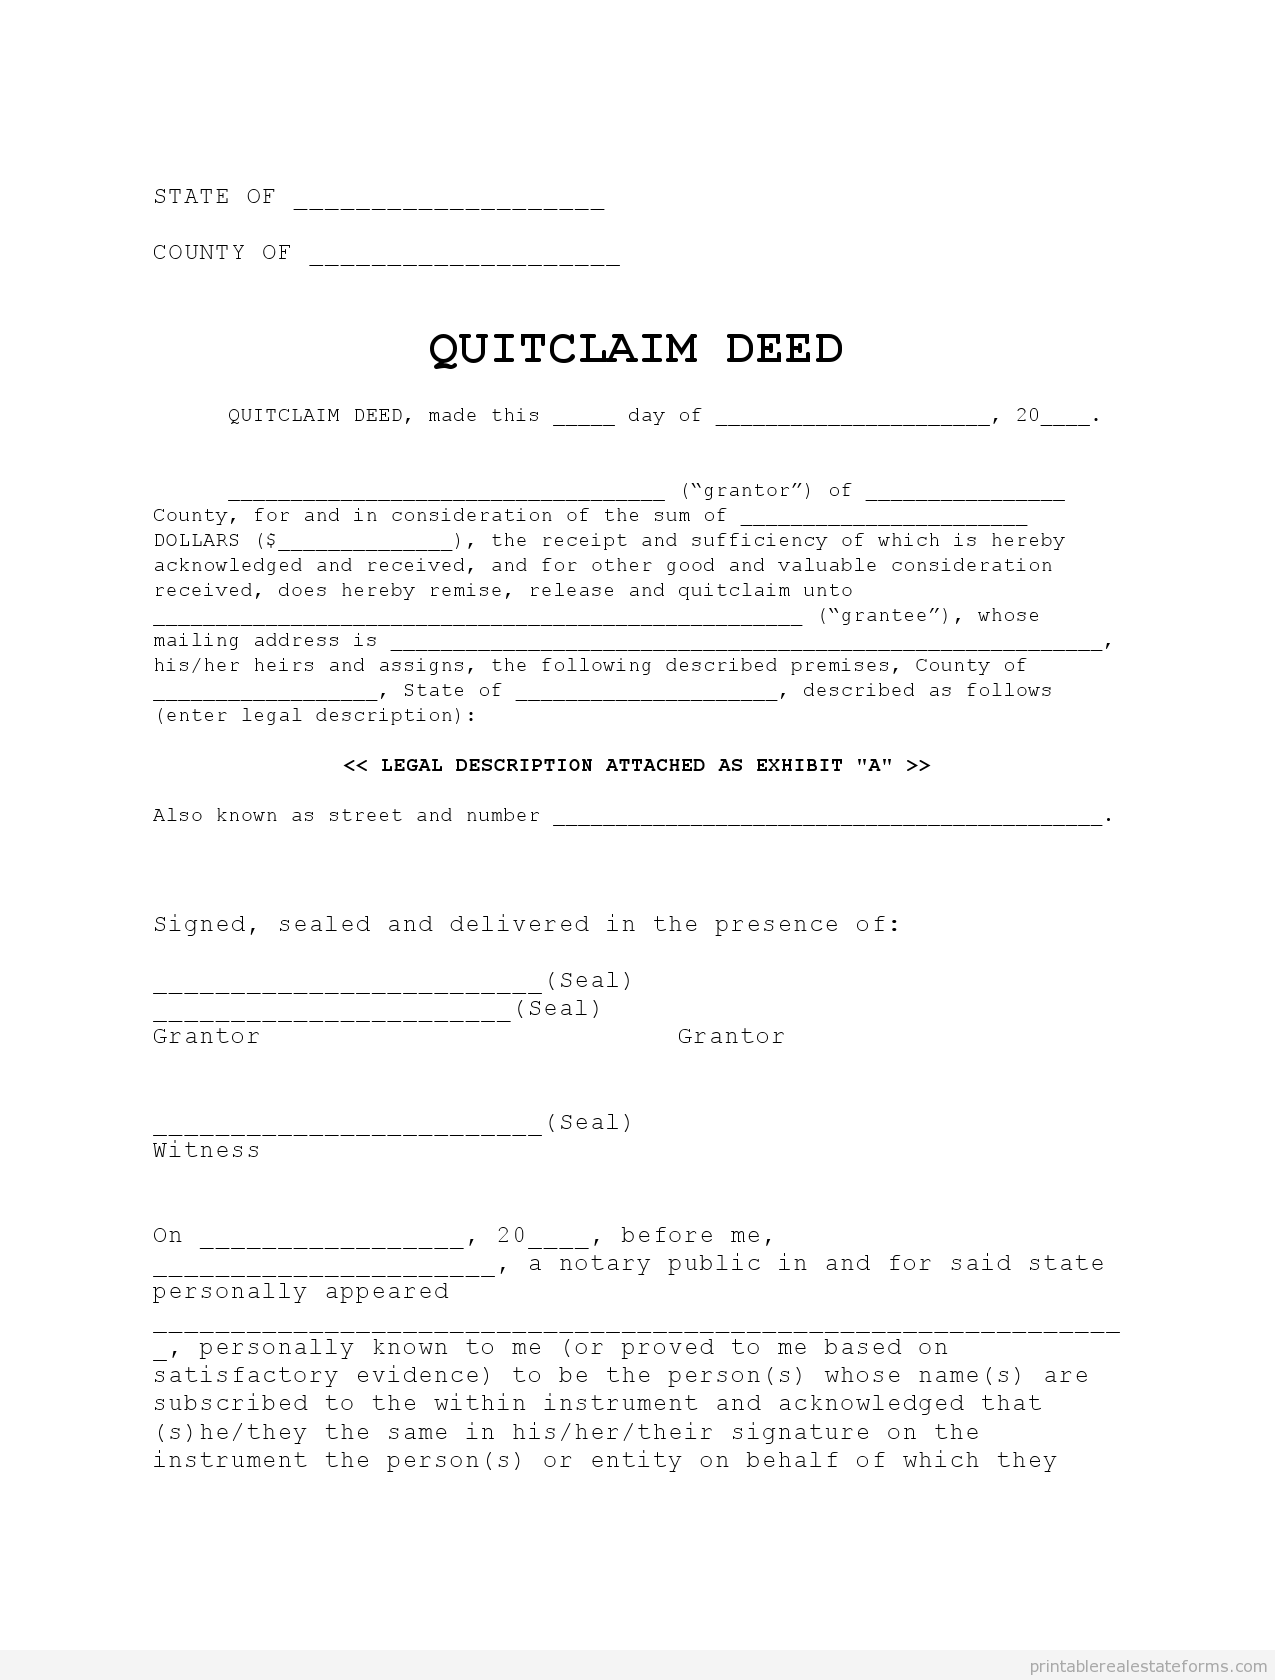 Free Printable Blank Quitclaim Deed Example Form (PDF)